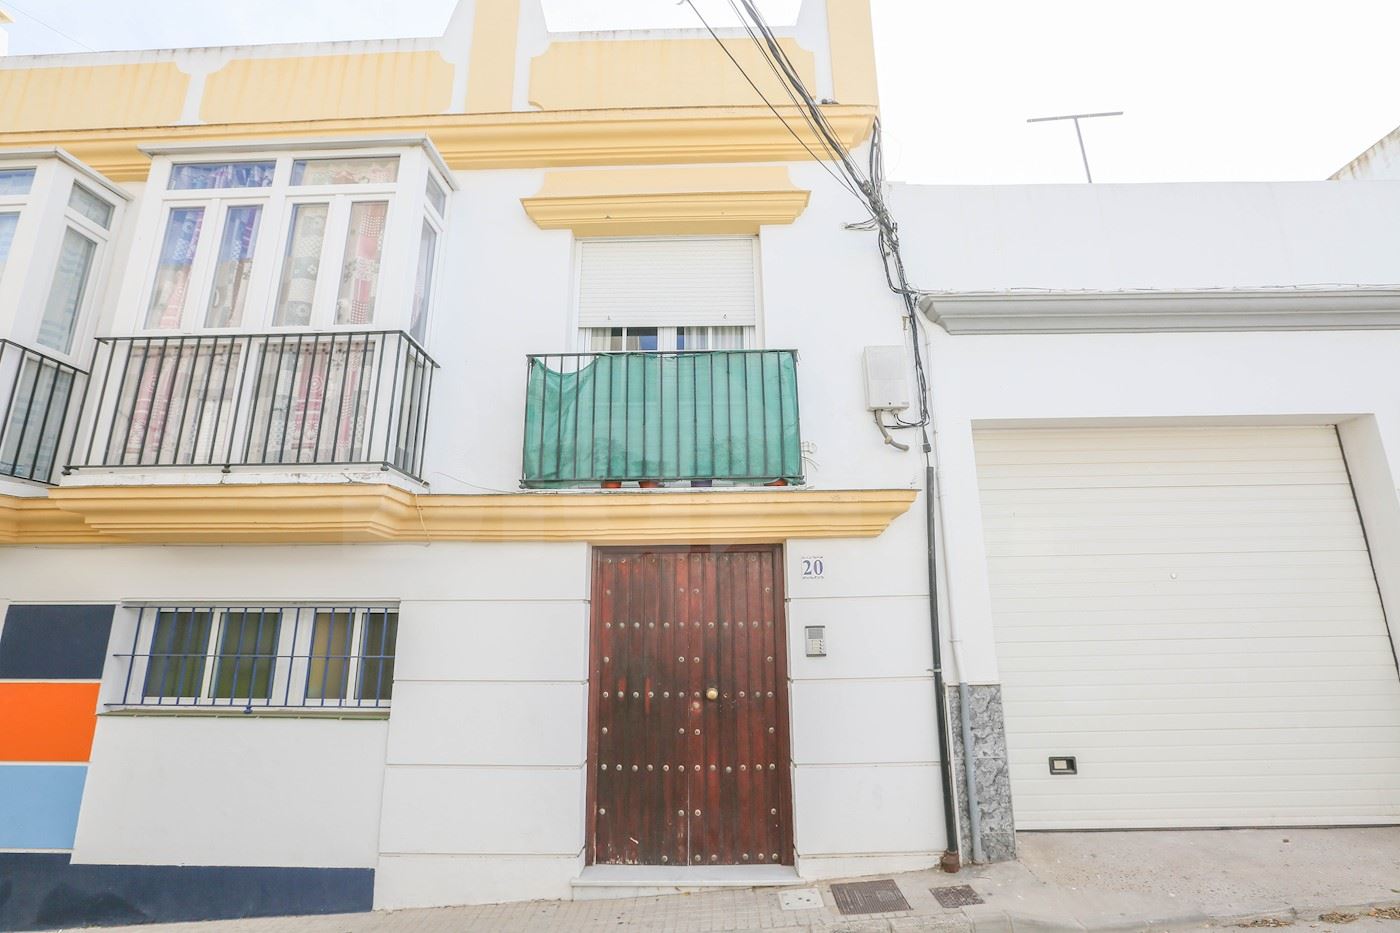 Calle Argentina, Chiclana de la Frontera, Cádiz 1/27